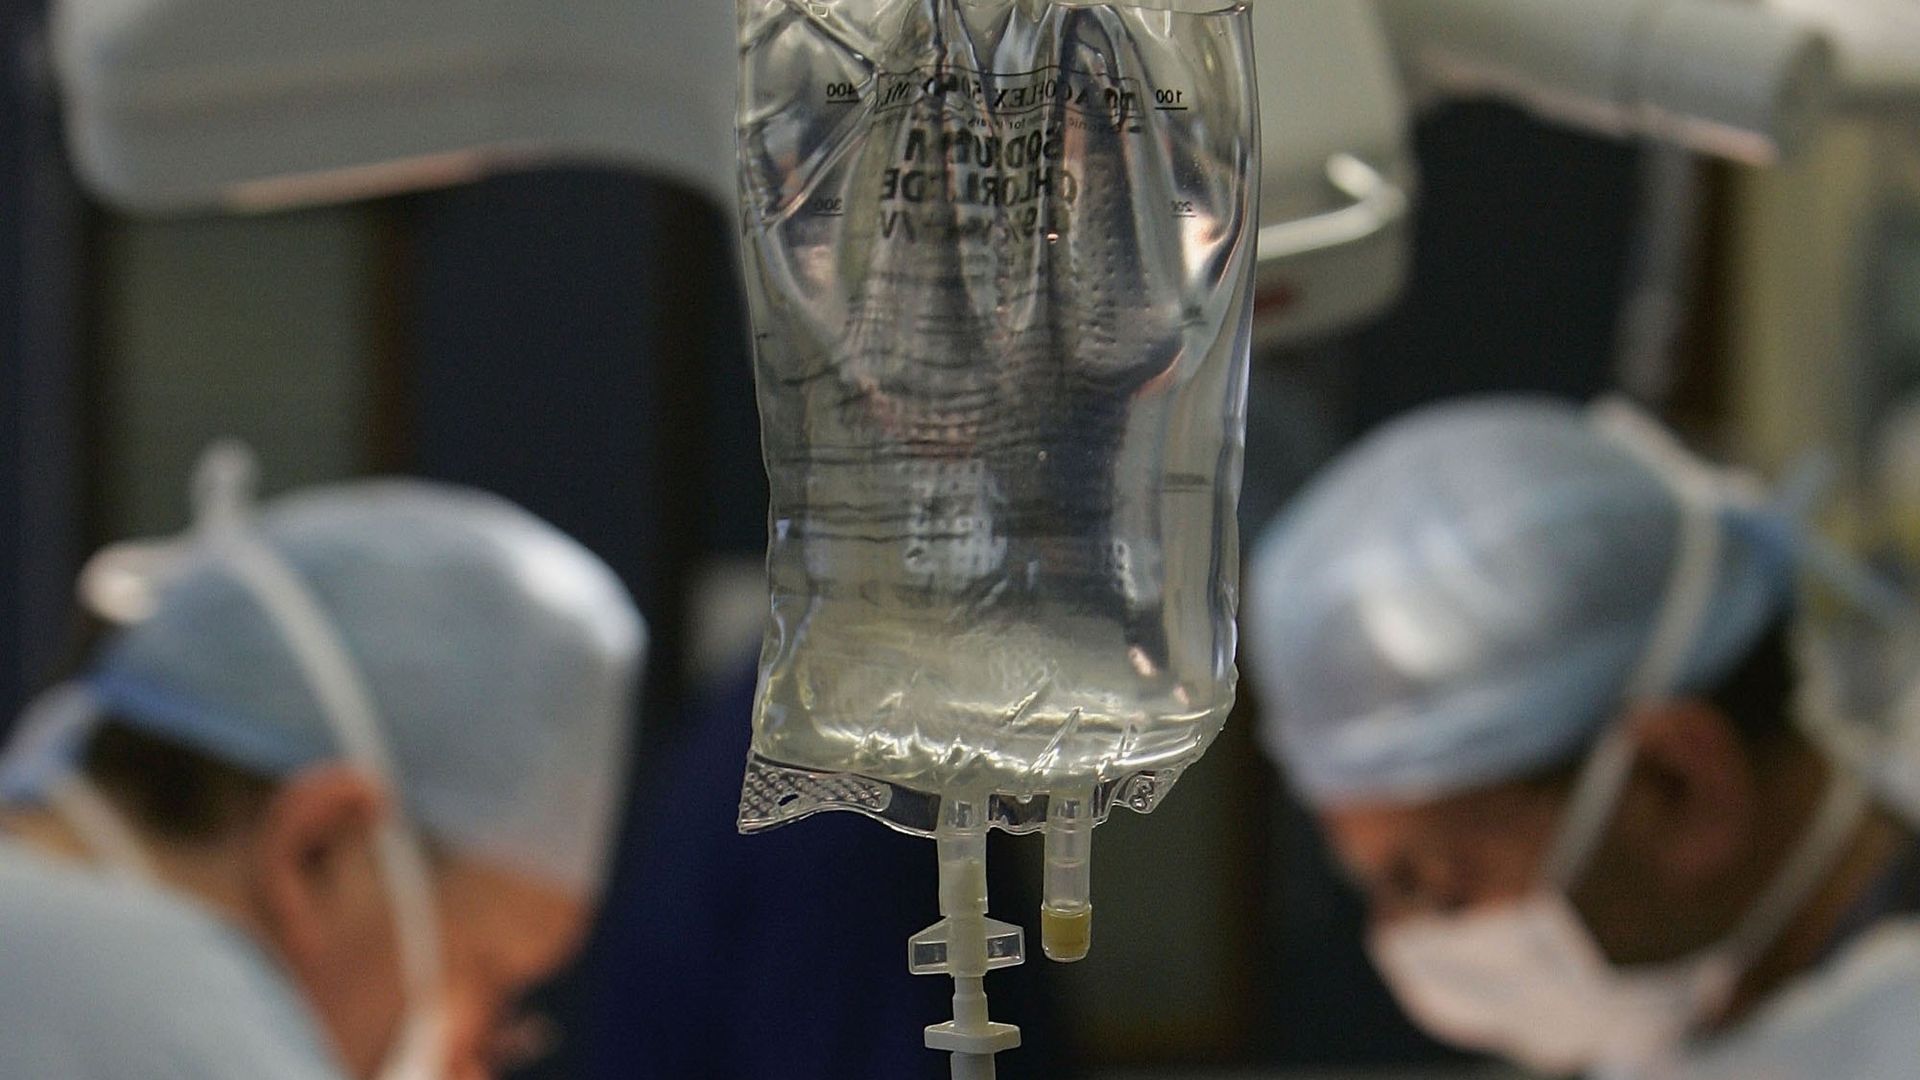 An IV bag hangs as surgeons conduct an operation.